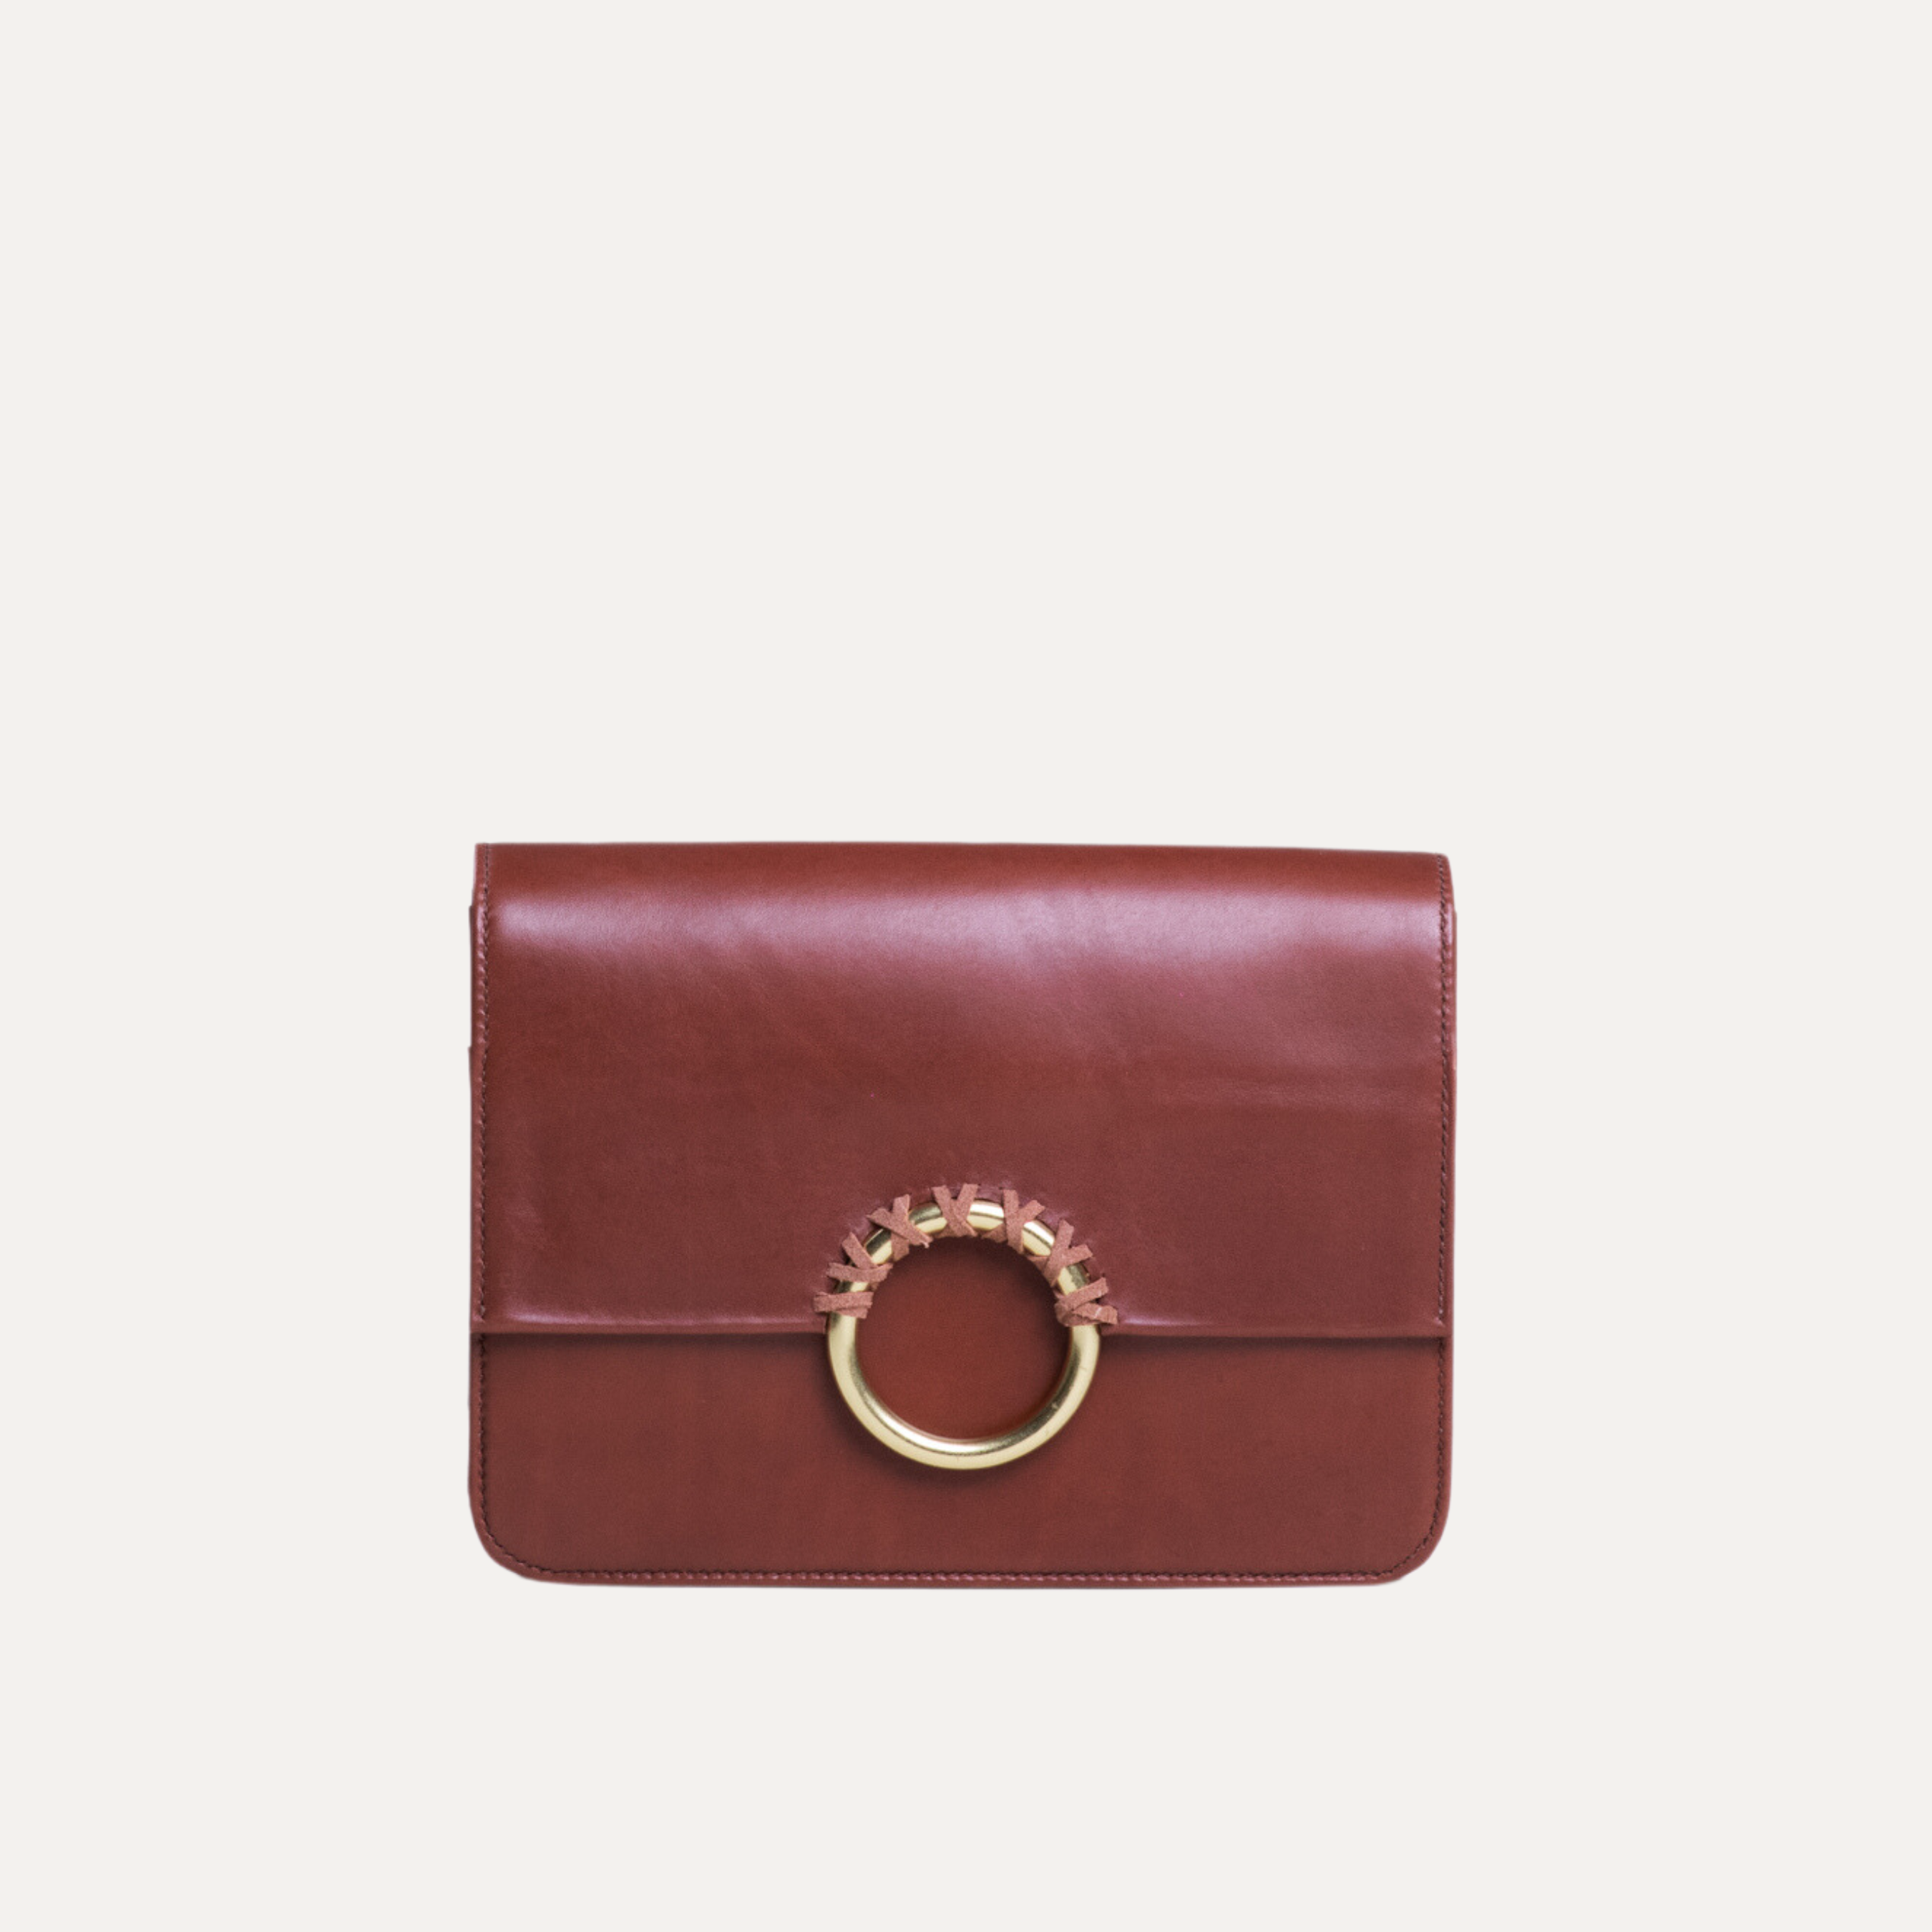 Chestnut Brown Leather Luxury Shoulder Bag Made in Australia